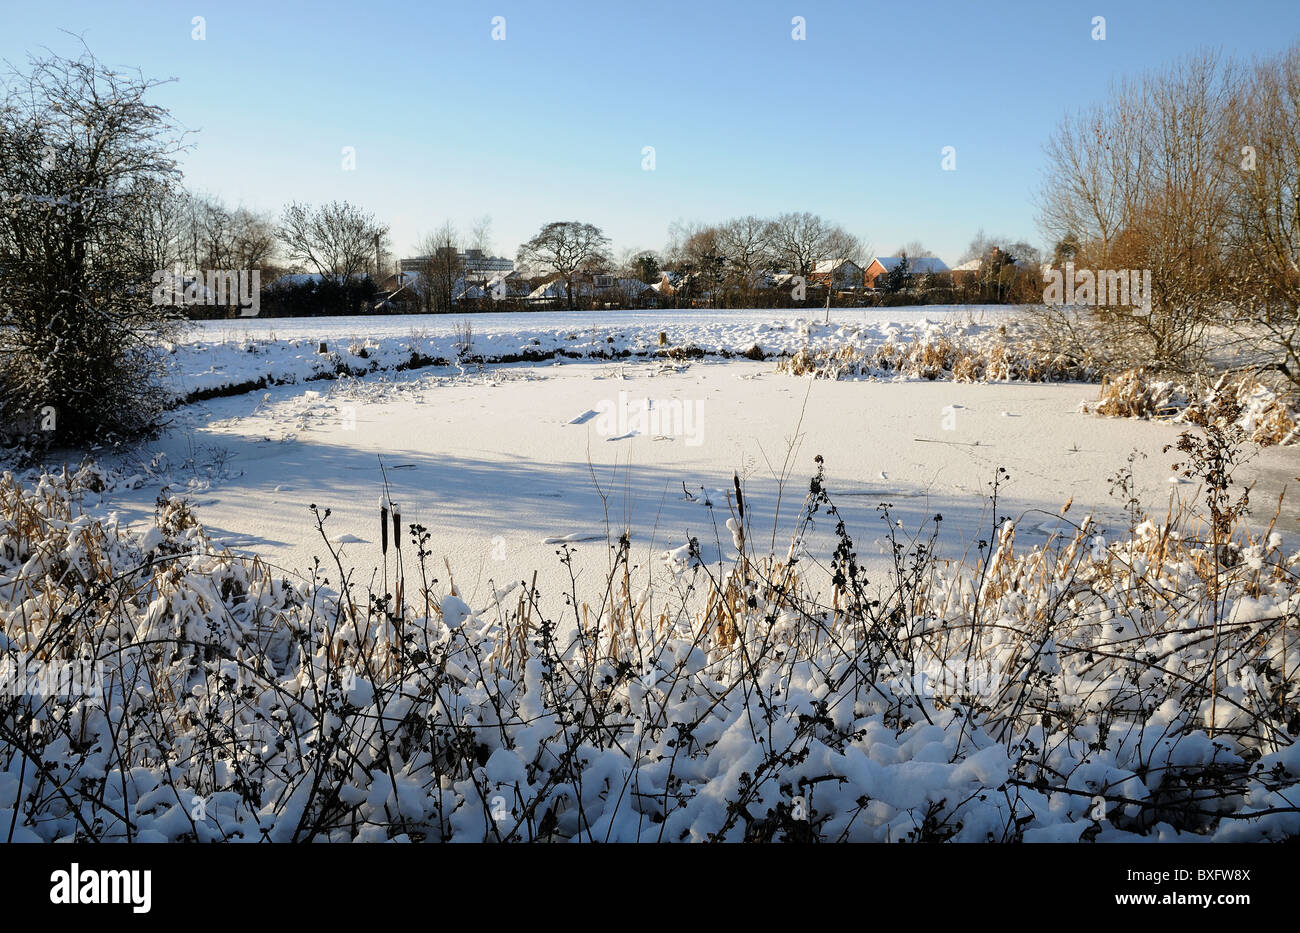 snow on frozen pond Stock Photo